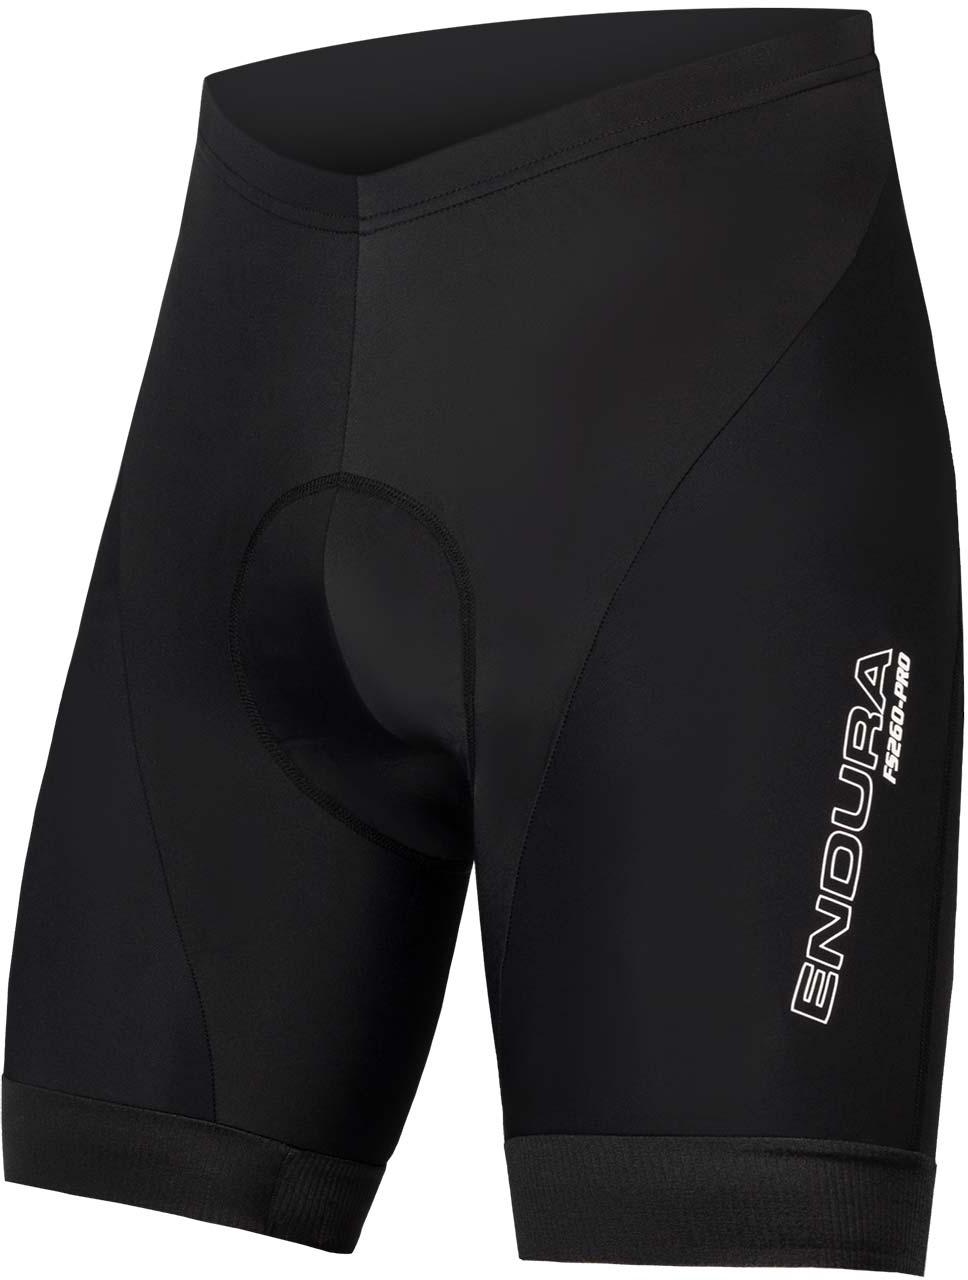 Endura Fs260-pro Shorts  Black